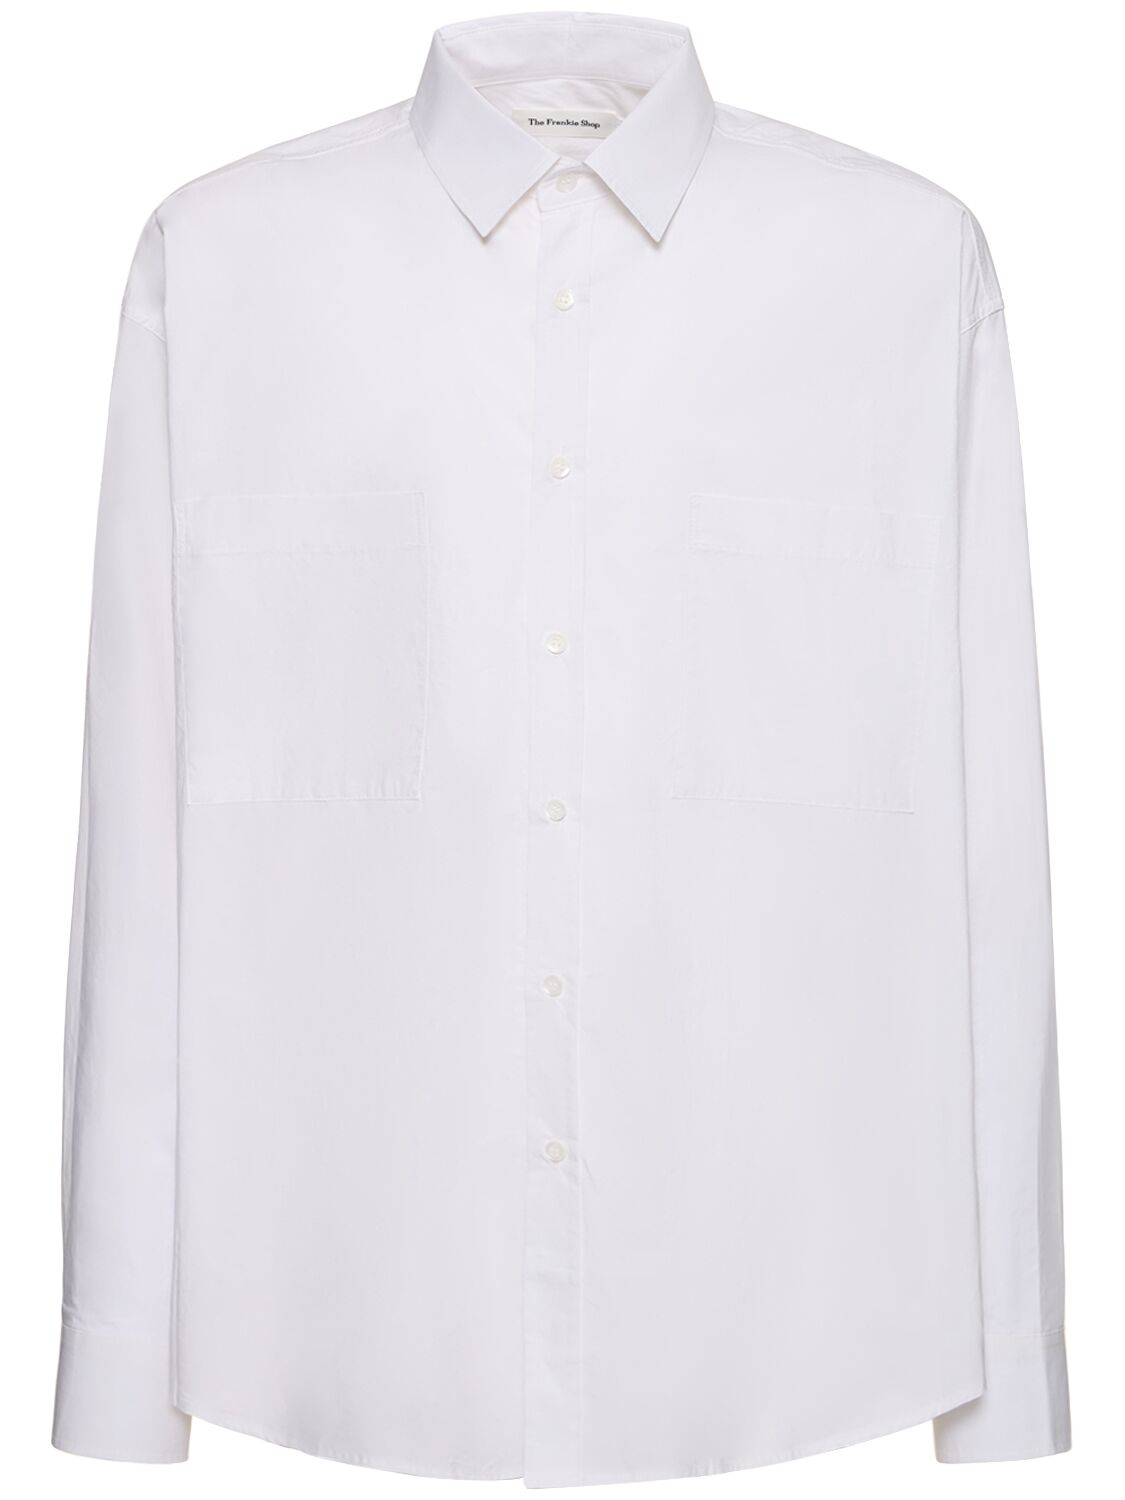 Image of Gus Oversize Cotton Shirt